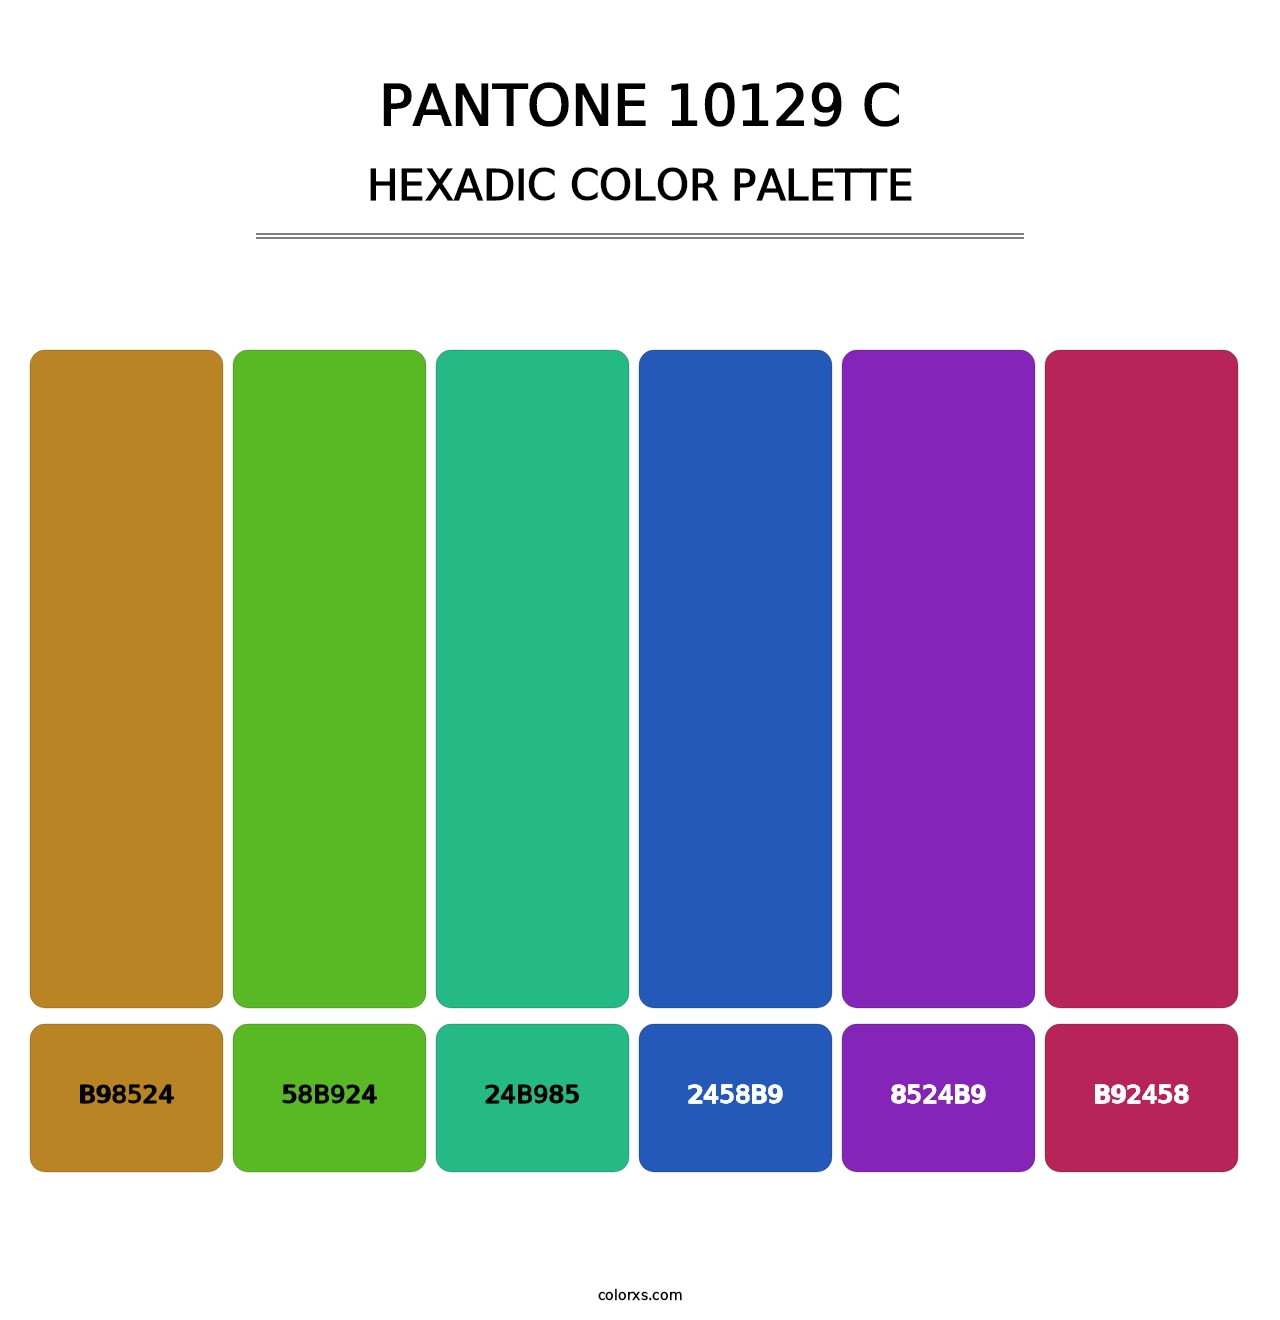 PANTONE 10129 C - Hexadic Color Palette